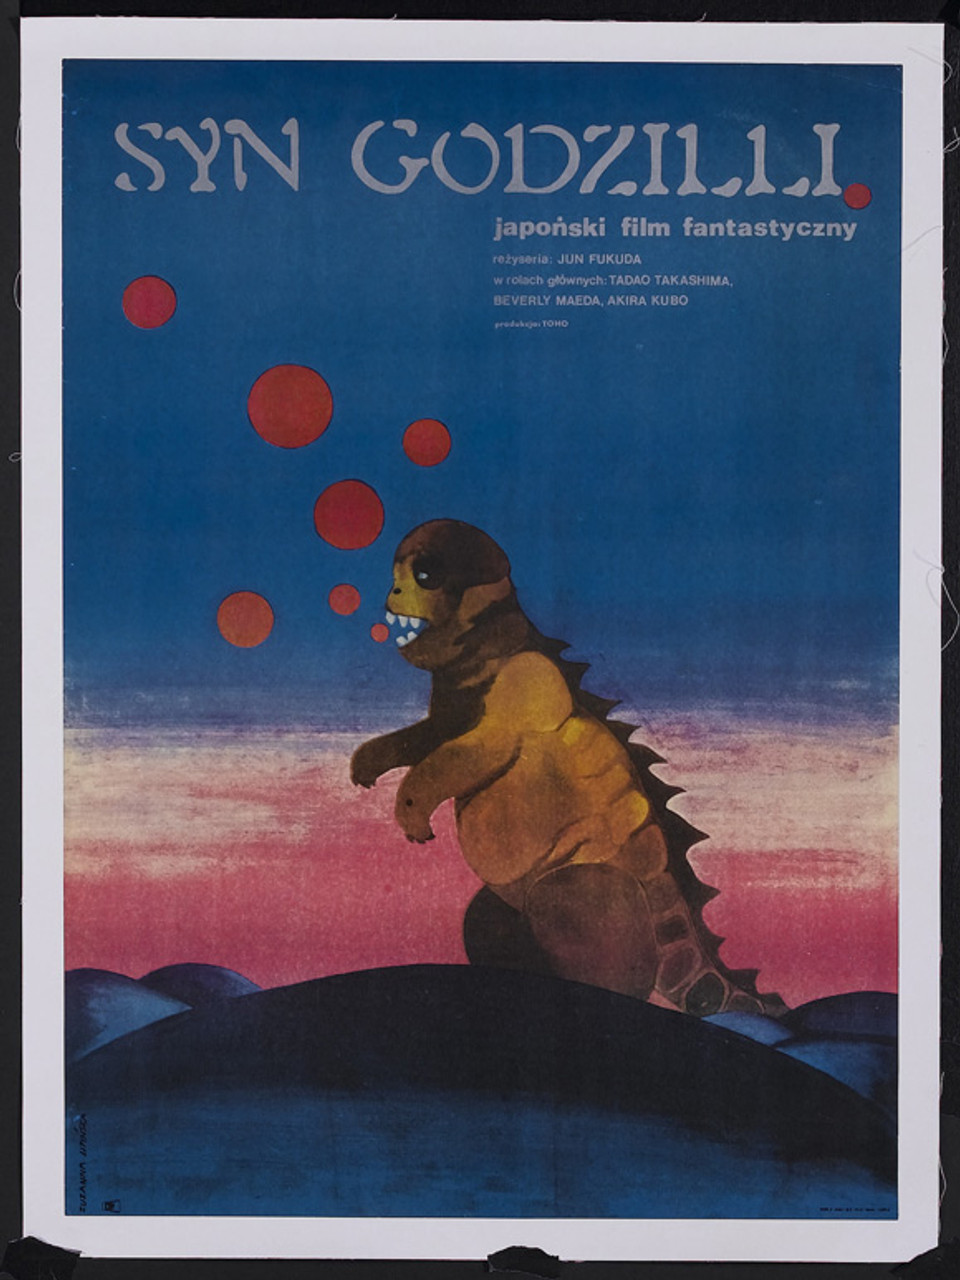 son of godzilla poster